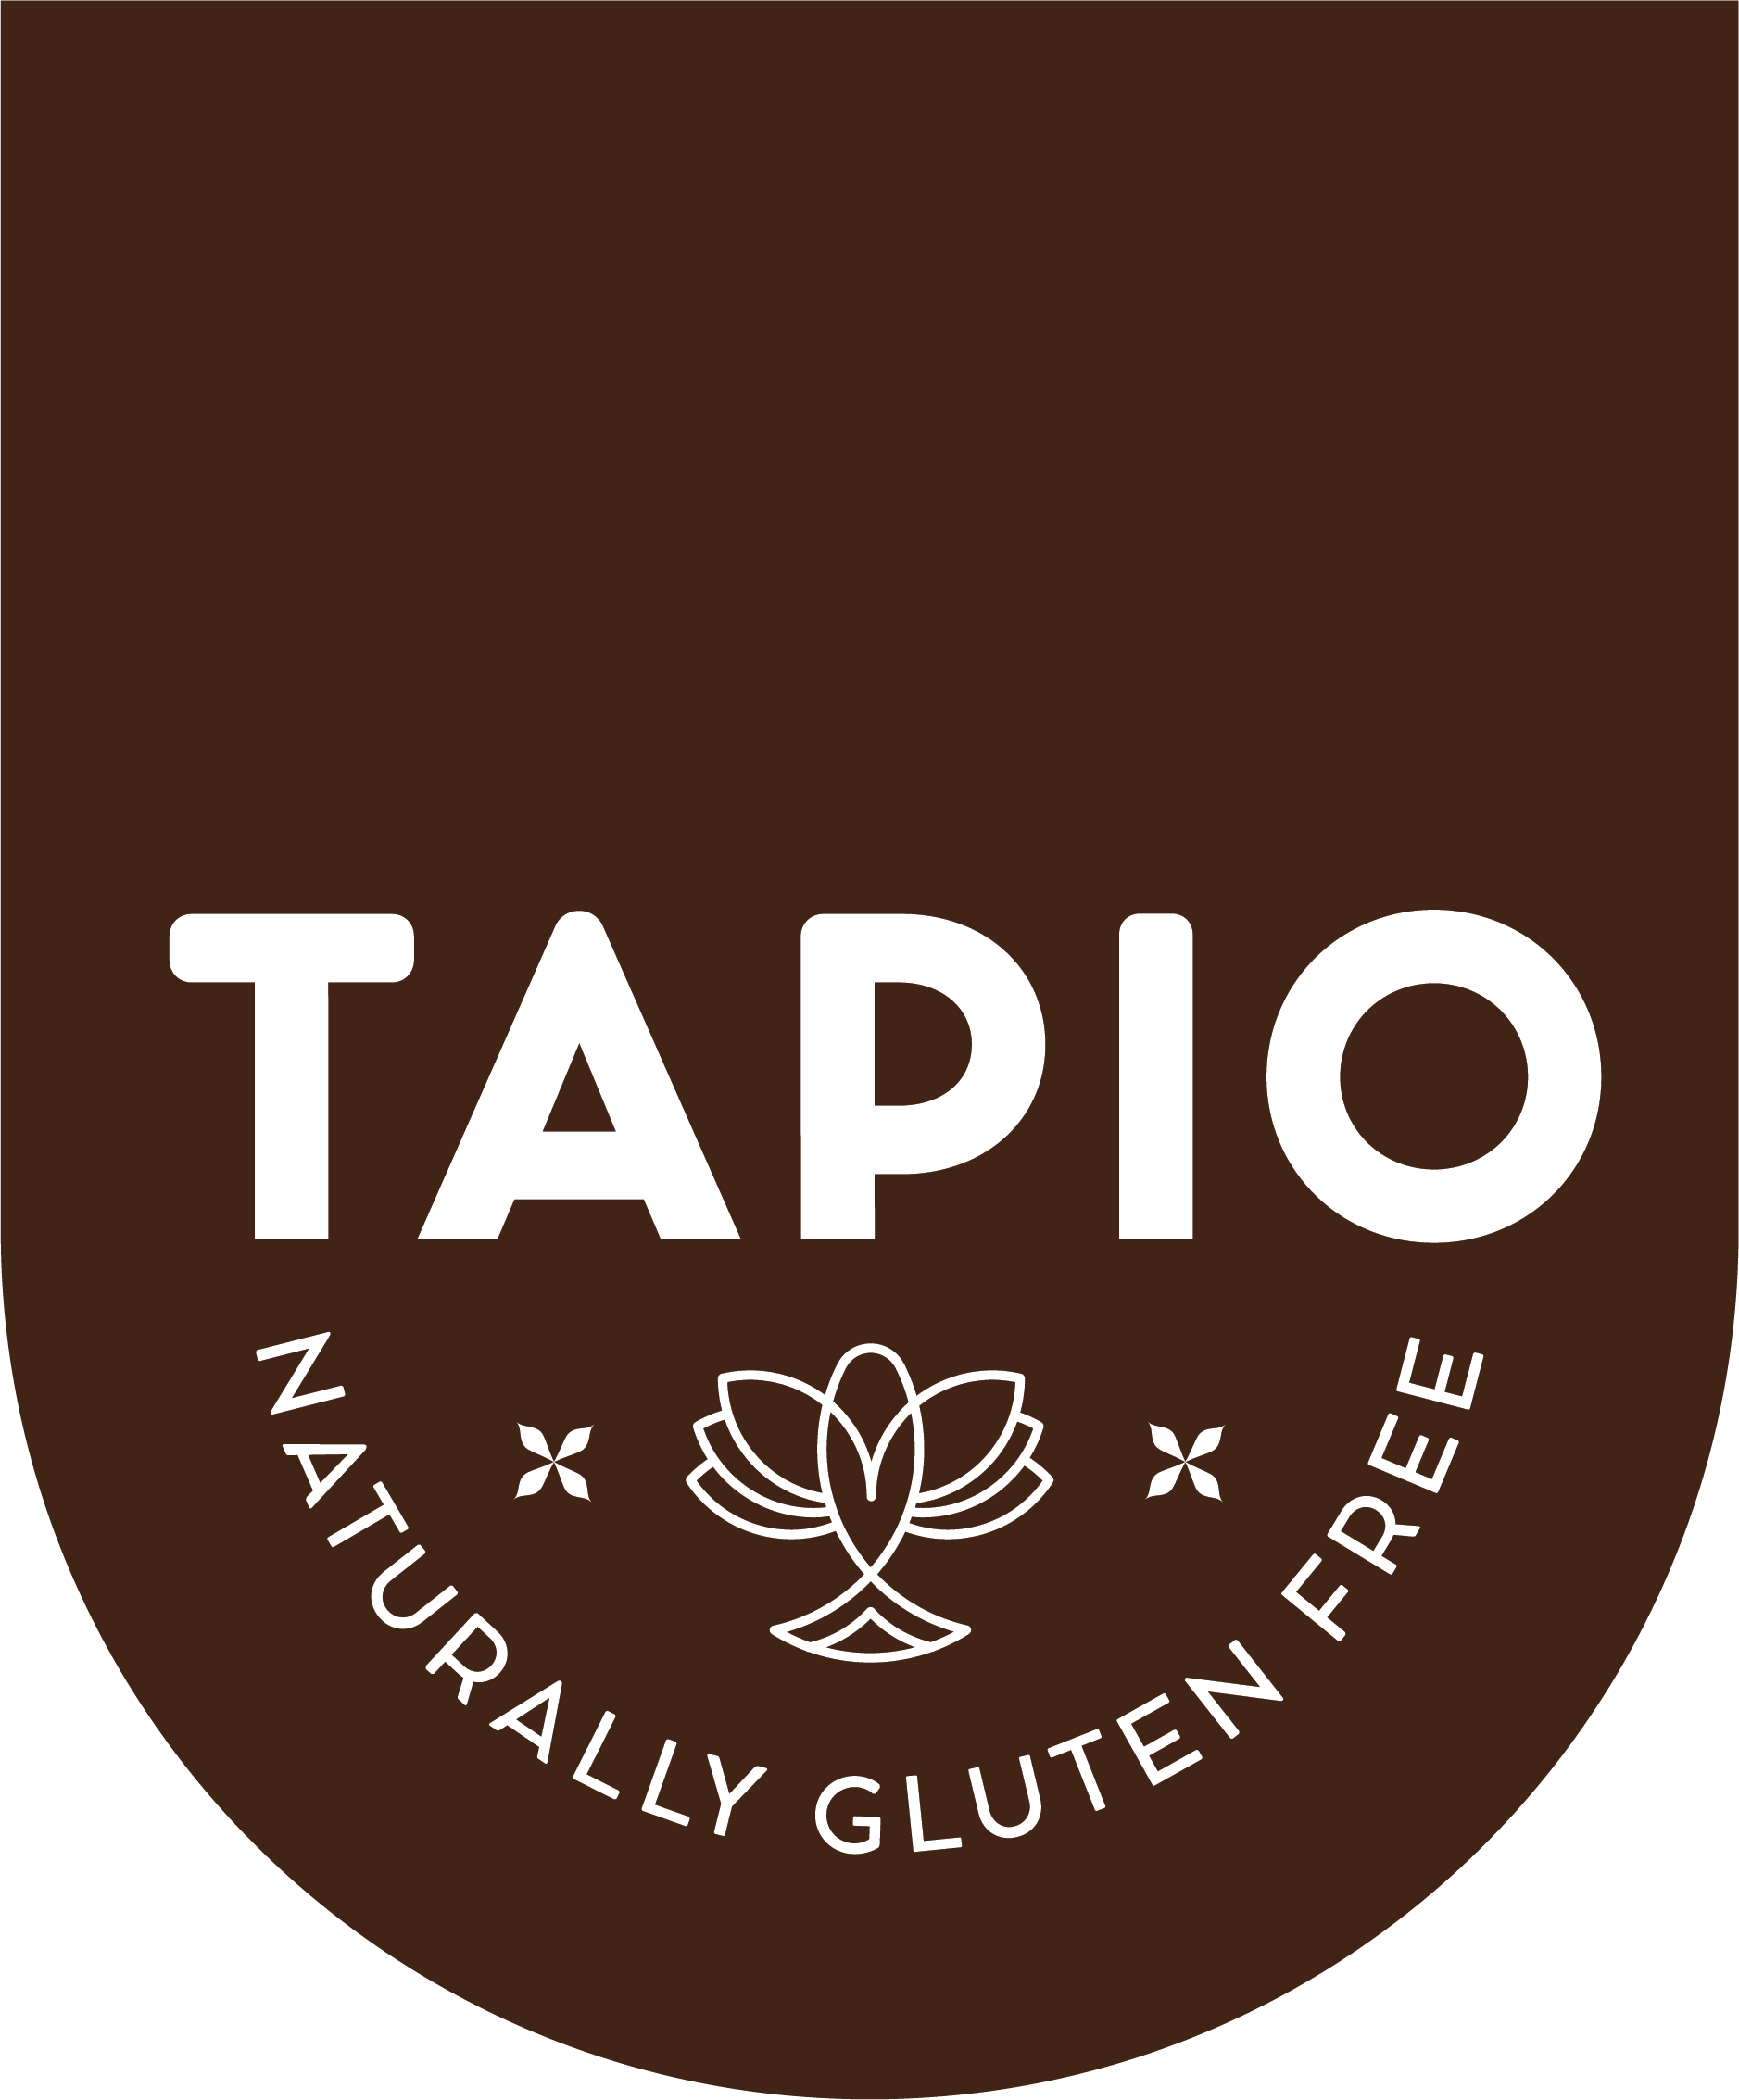 Tapios' Super Crunchy Website